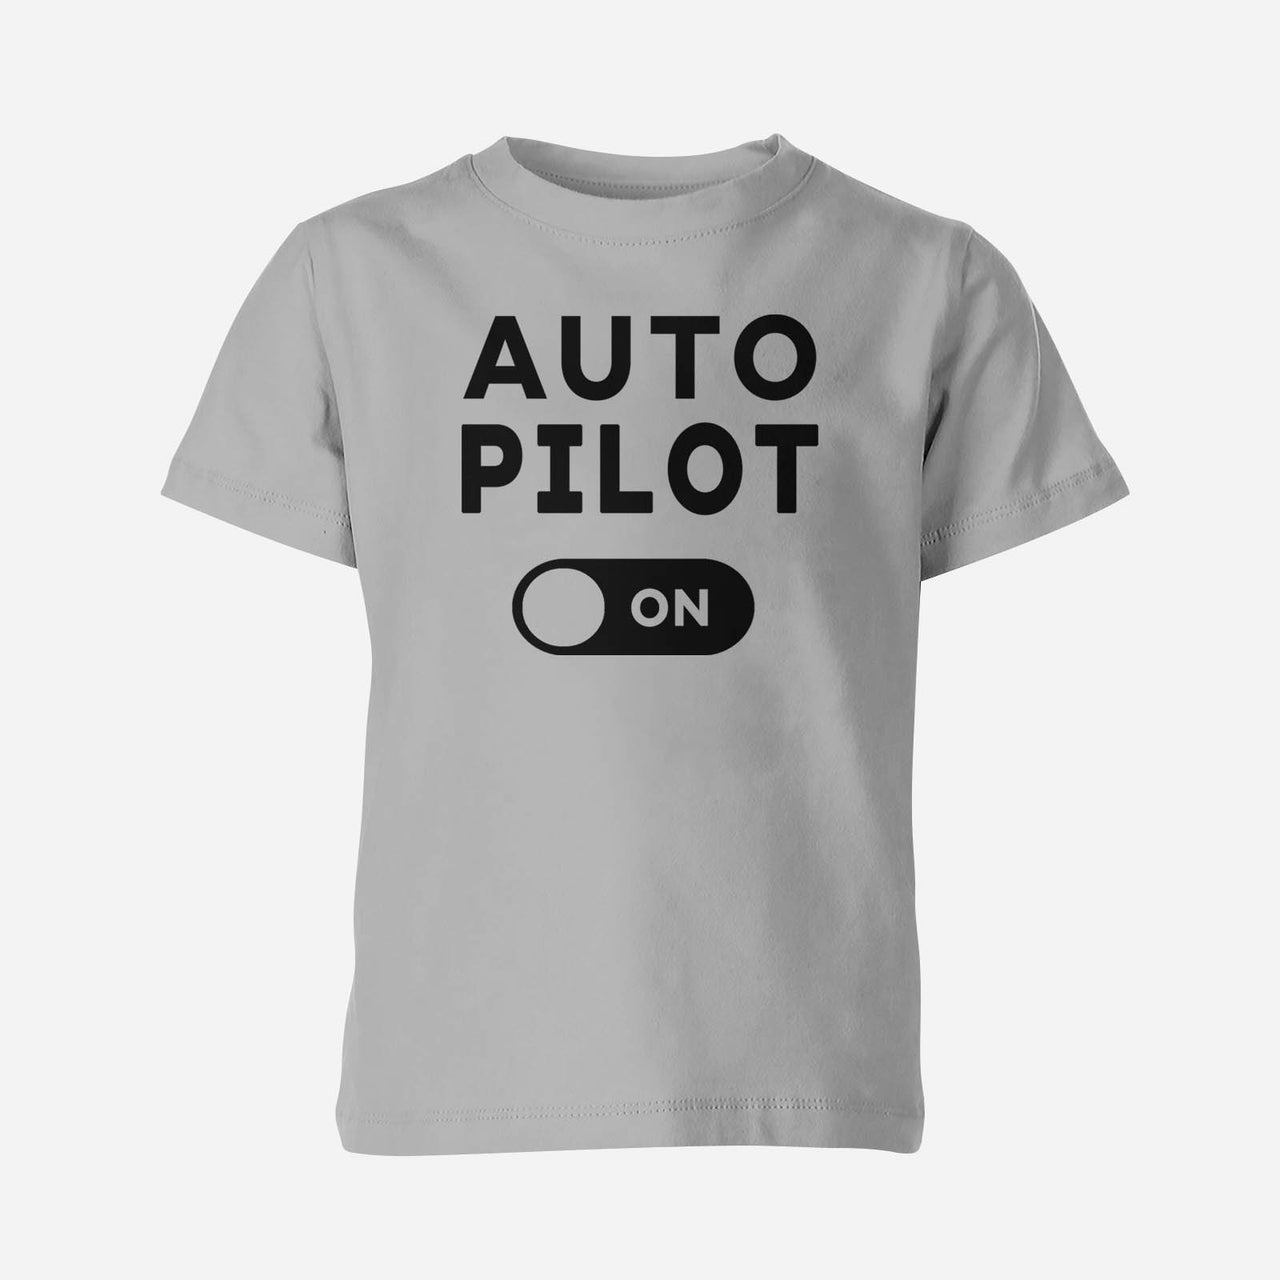 Auto Pilot ON Designed Children T-Shirts